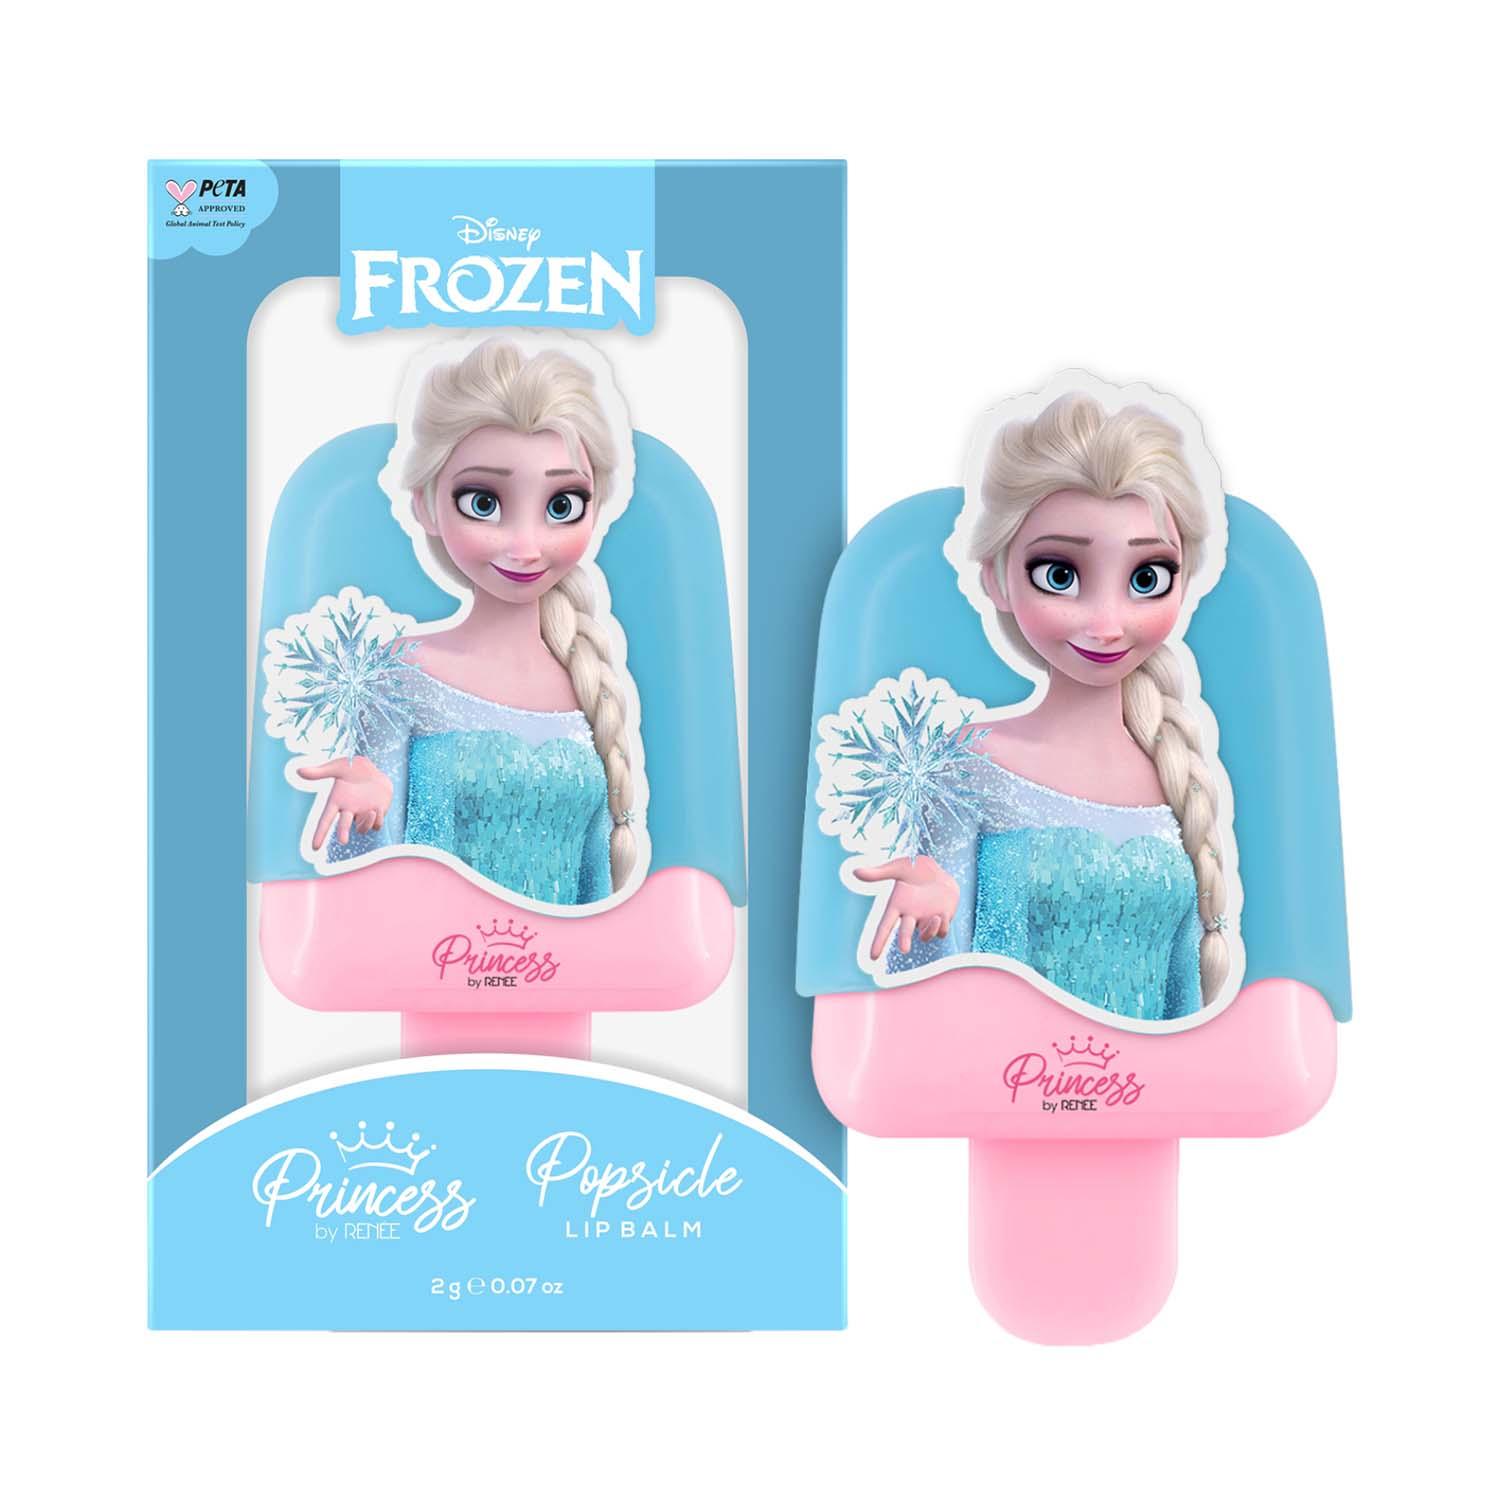 RENEE | Disney Frozen Princess By RENEE Popsicle Lip Balm - Elsa (2 g)